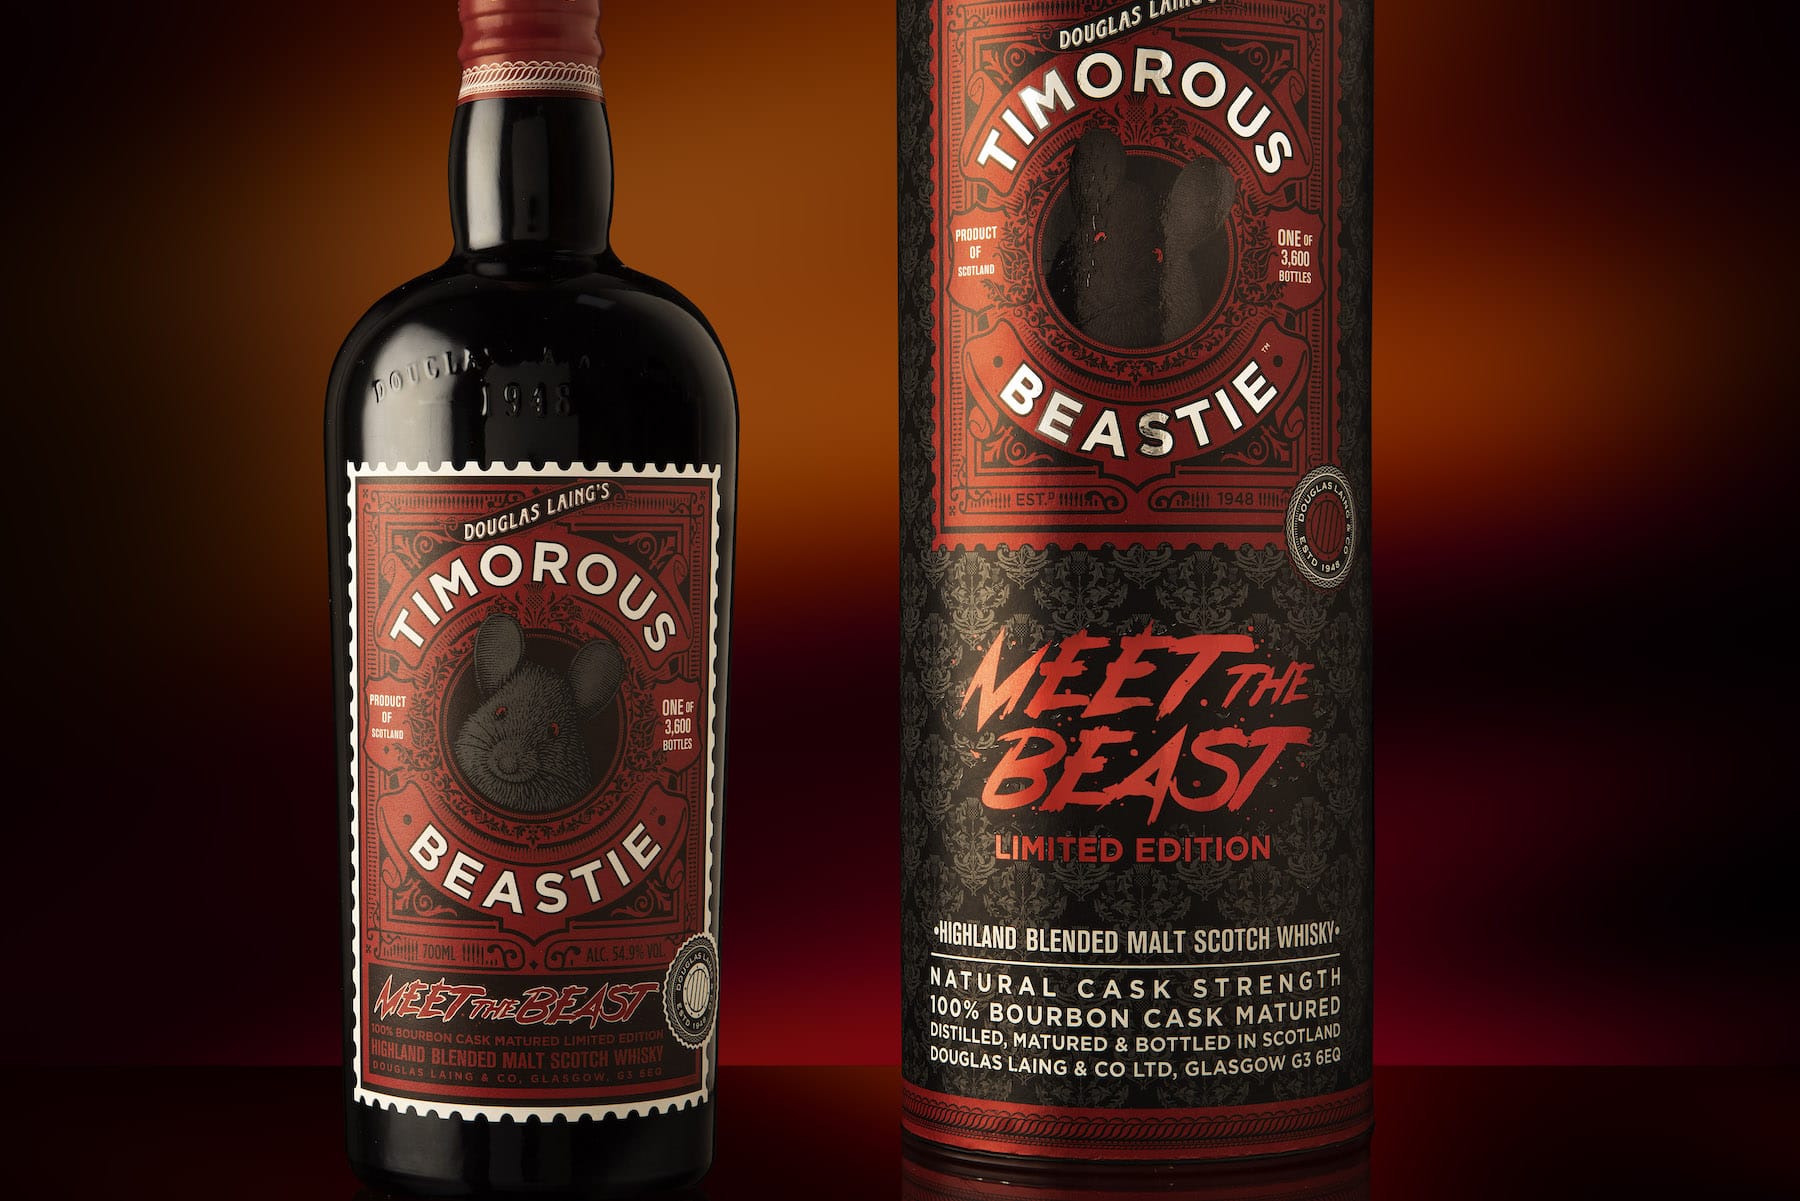 Douglas Laing Timorous Beastie "Meet The Beast" Cask Strength Limited Edition